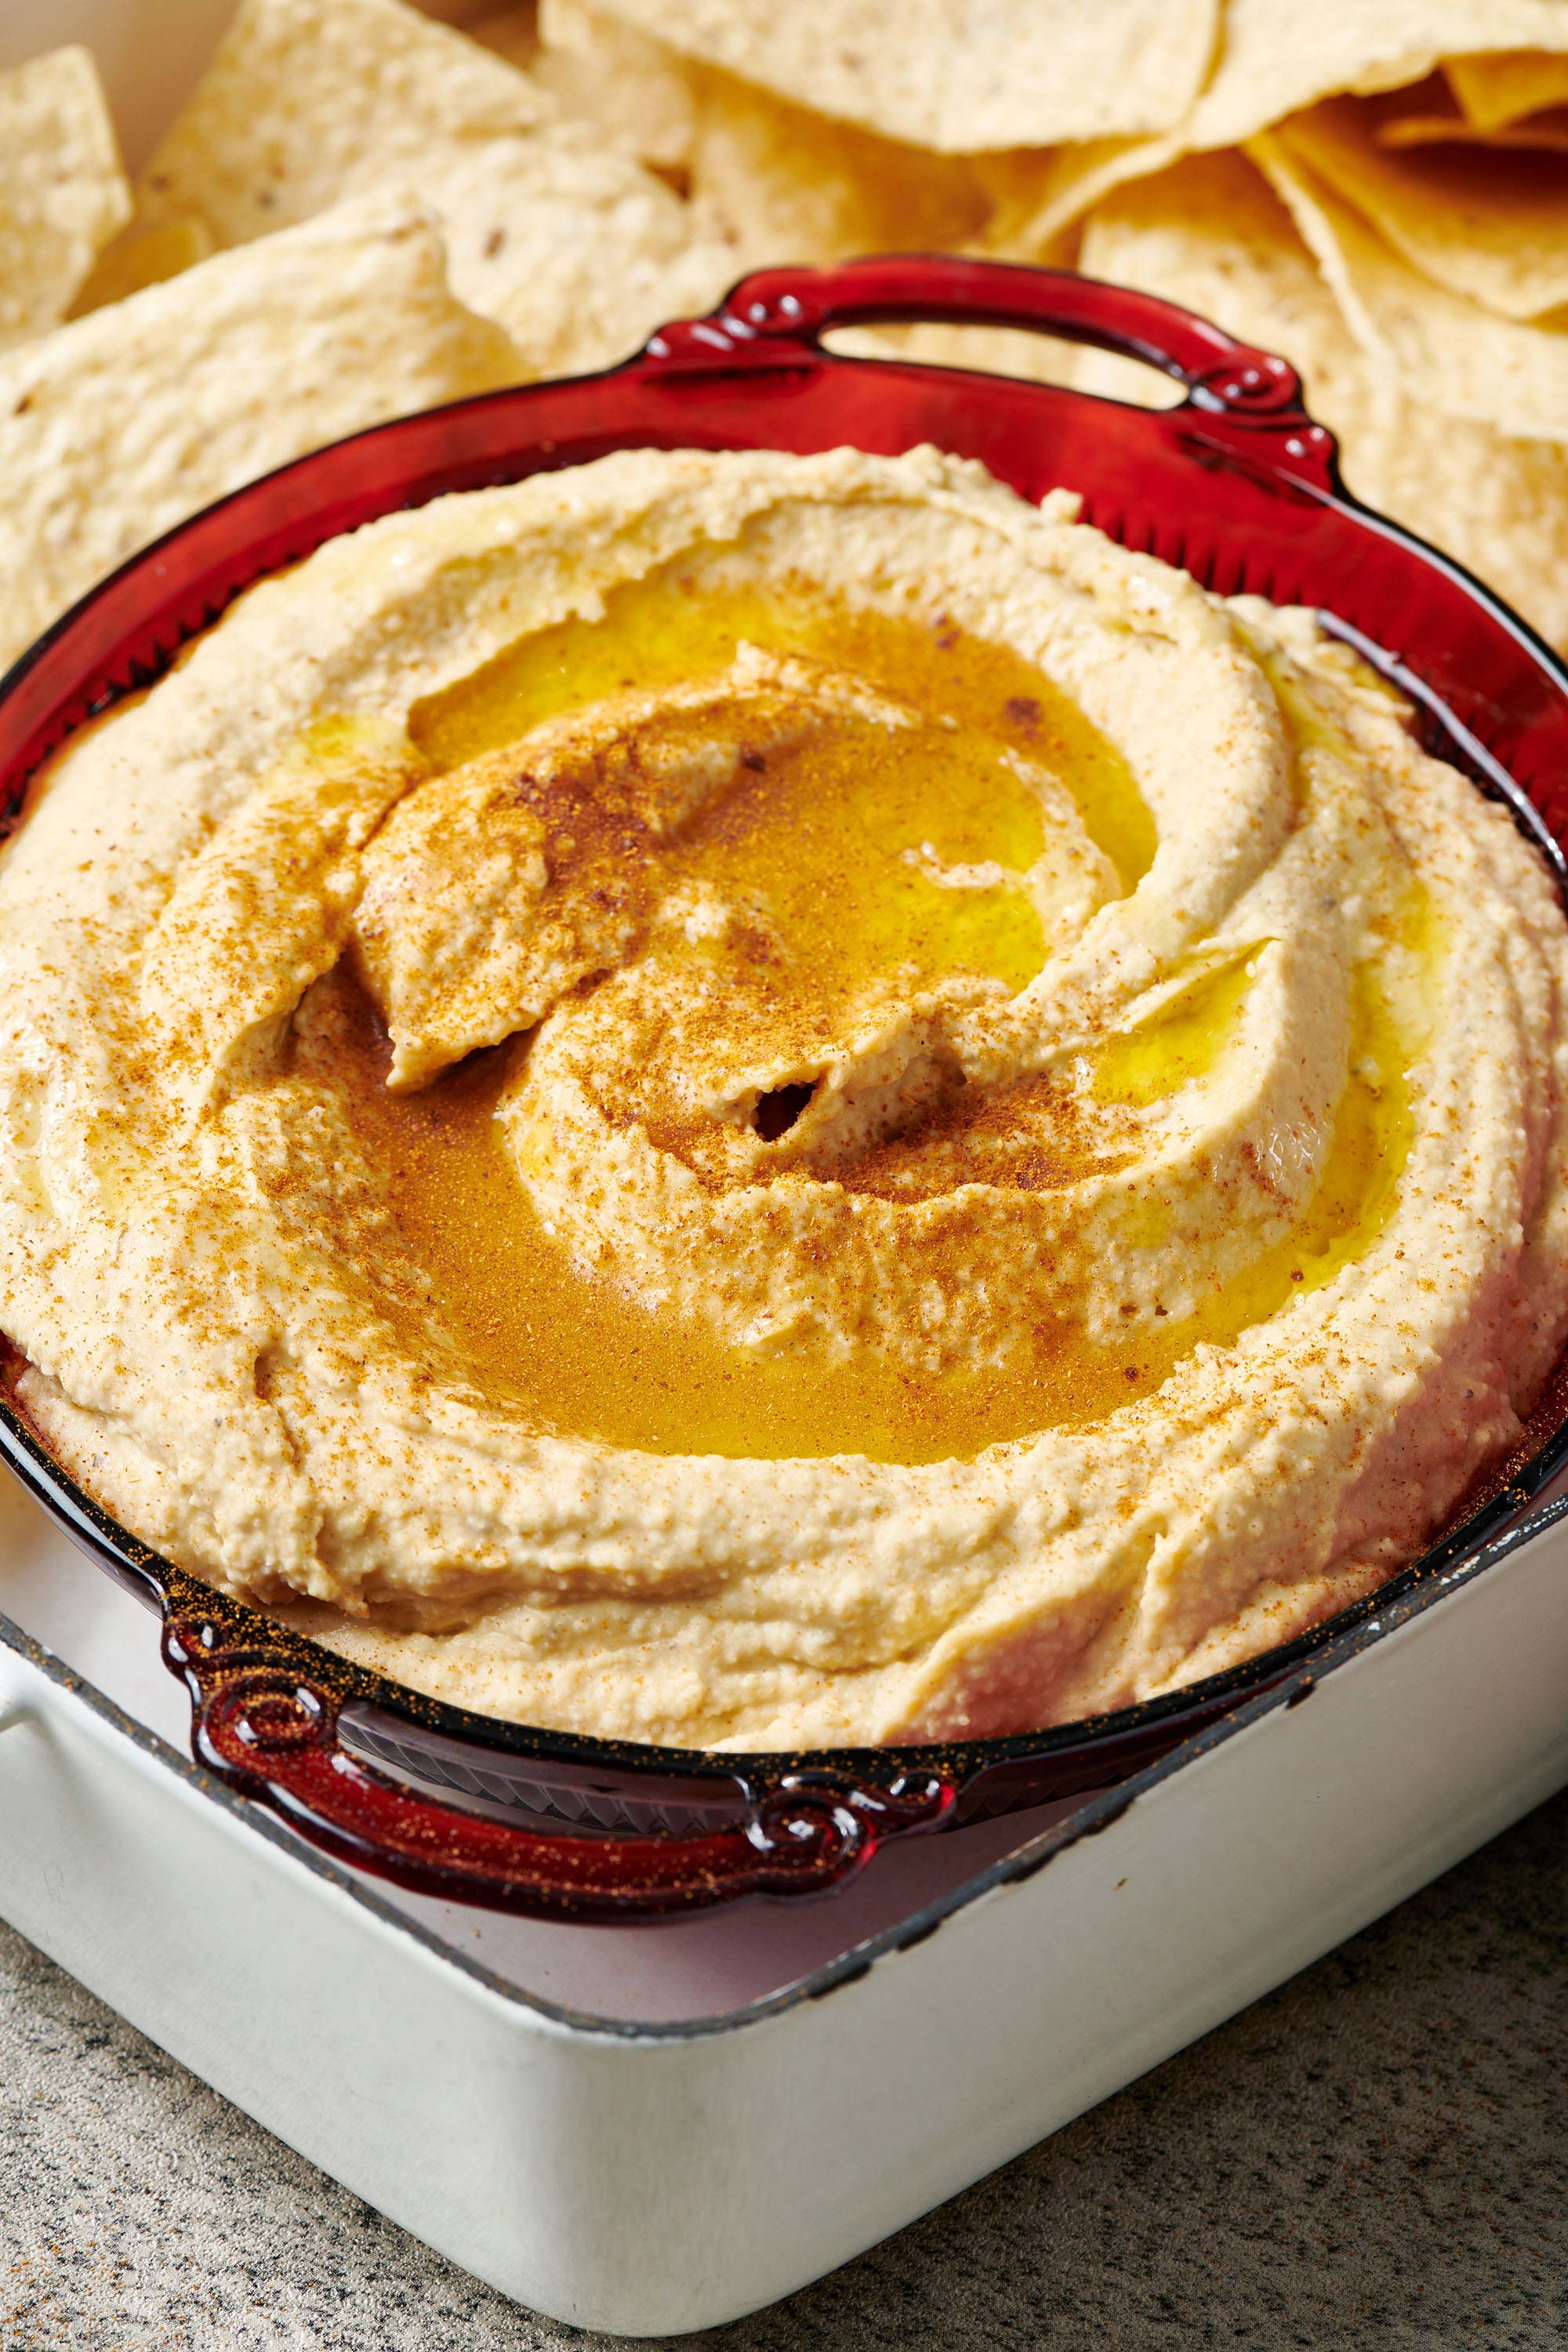 Hummus in a bowl.